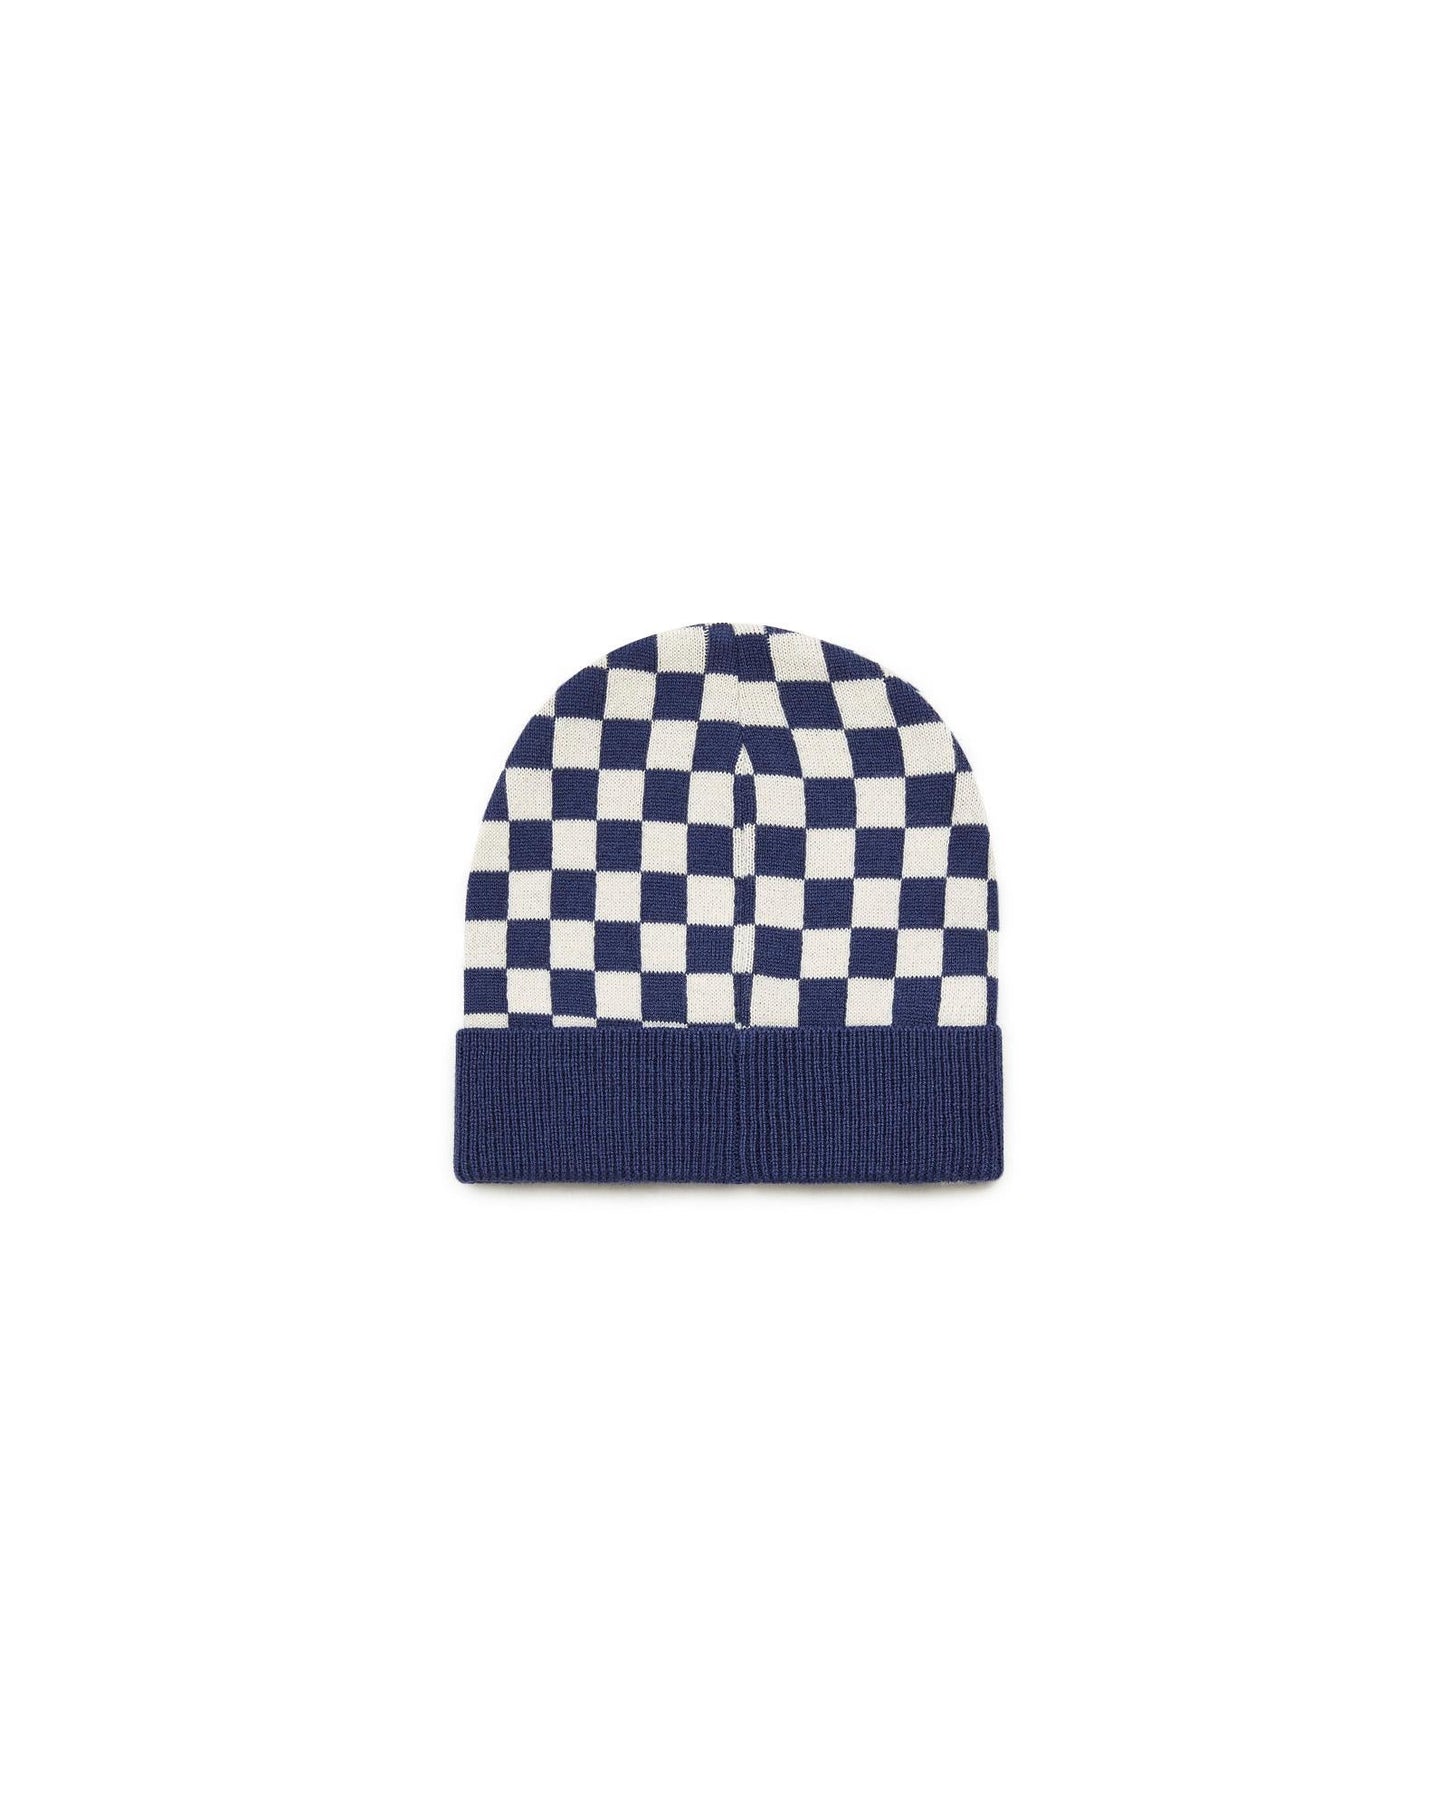 Beanie - checkerboard Blue in jacquard knitting